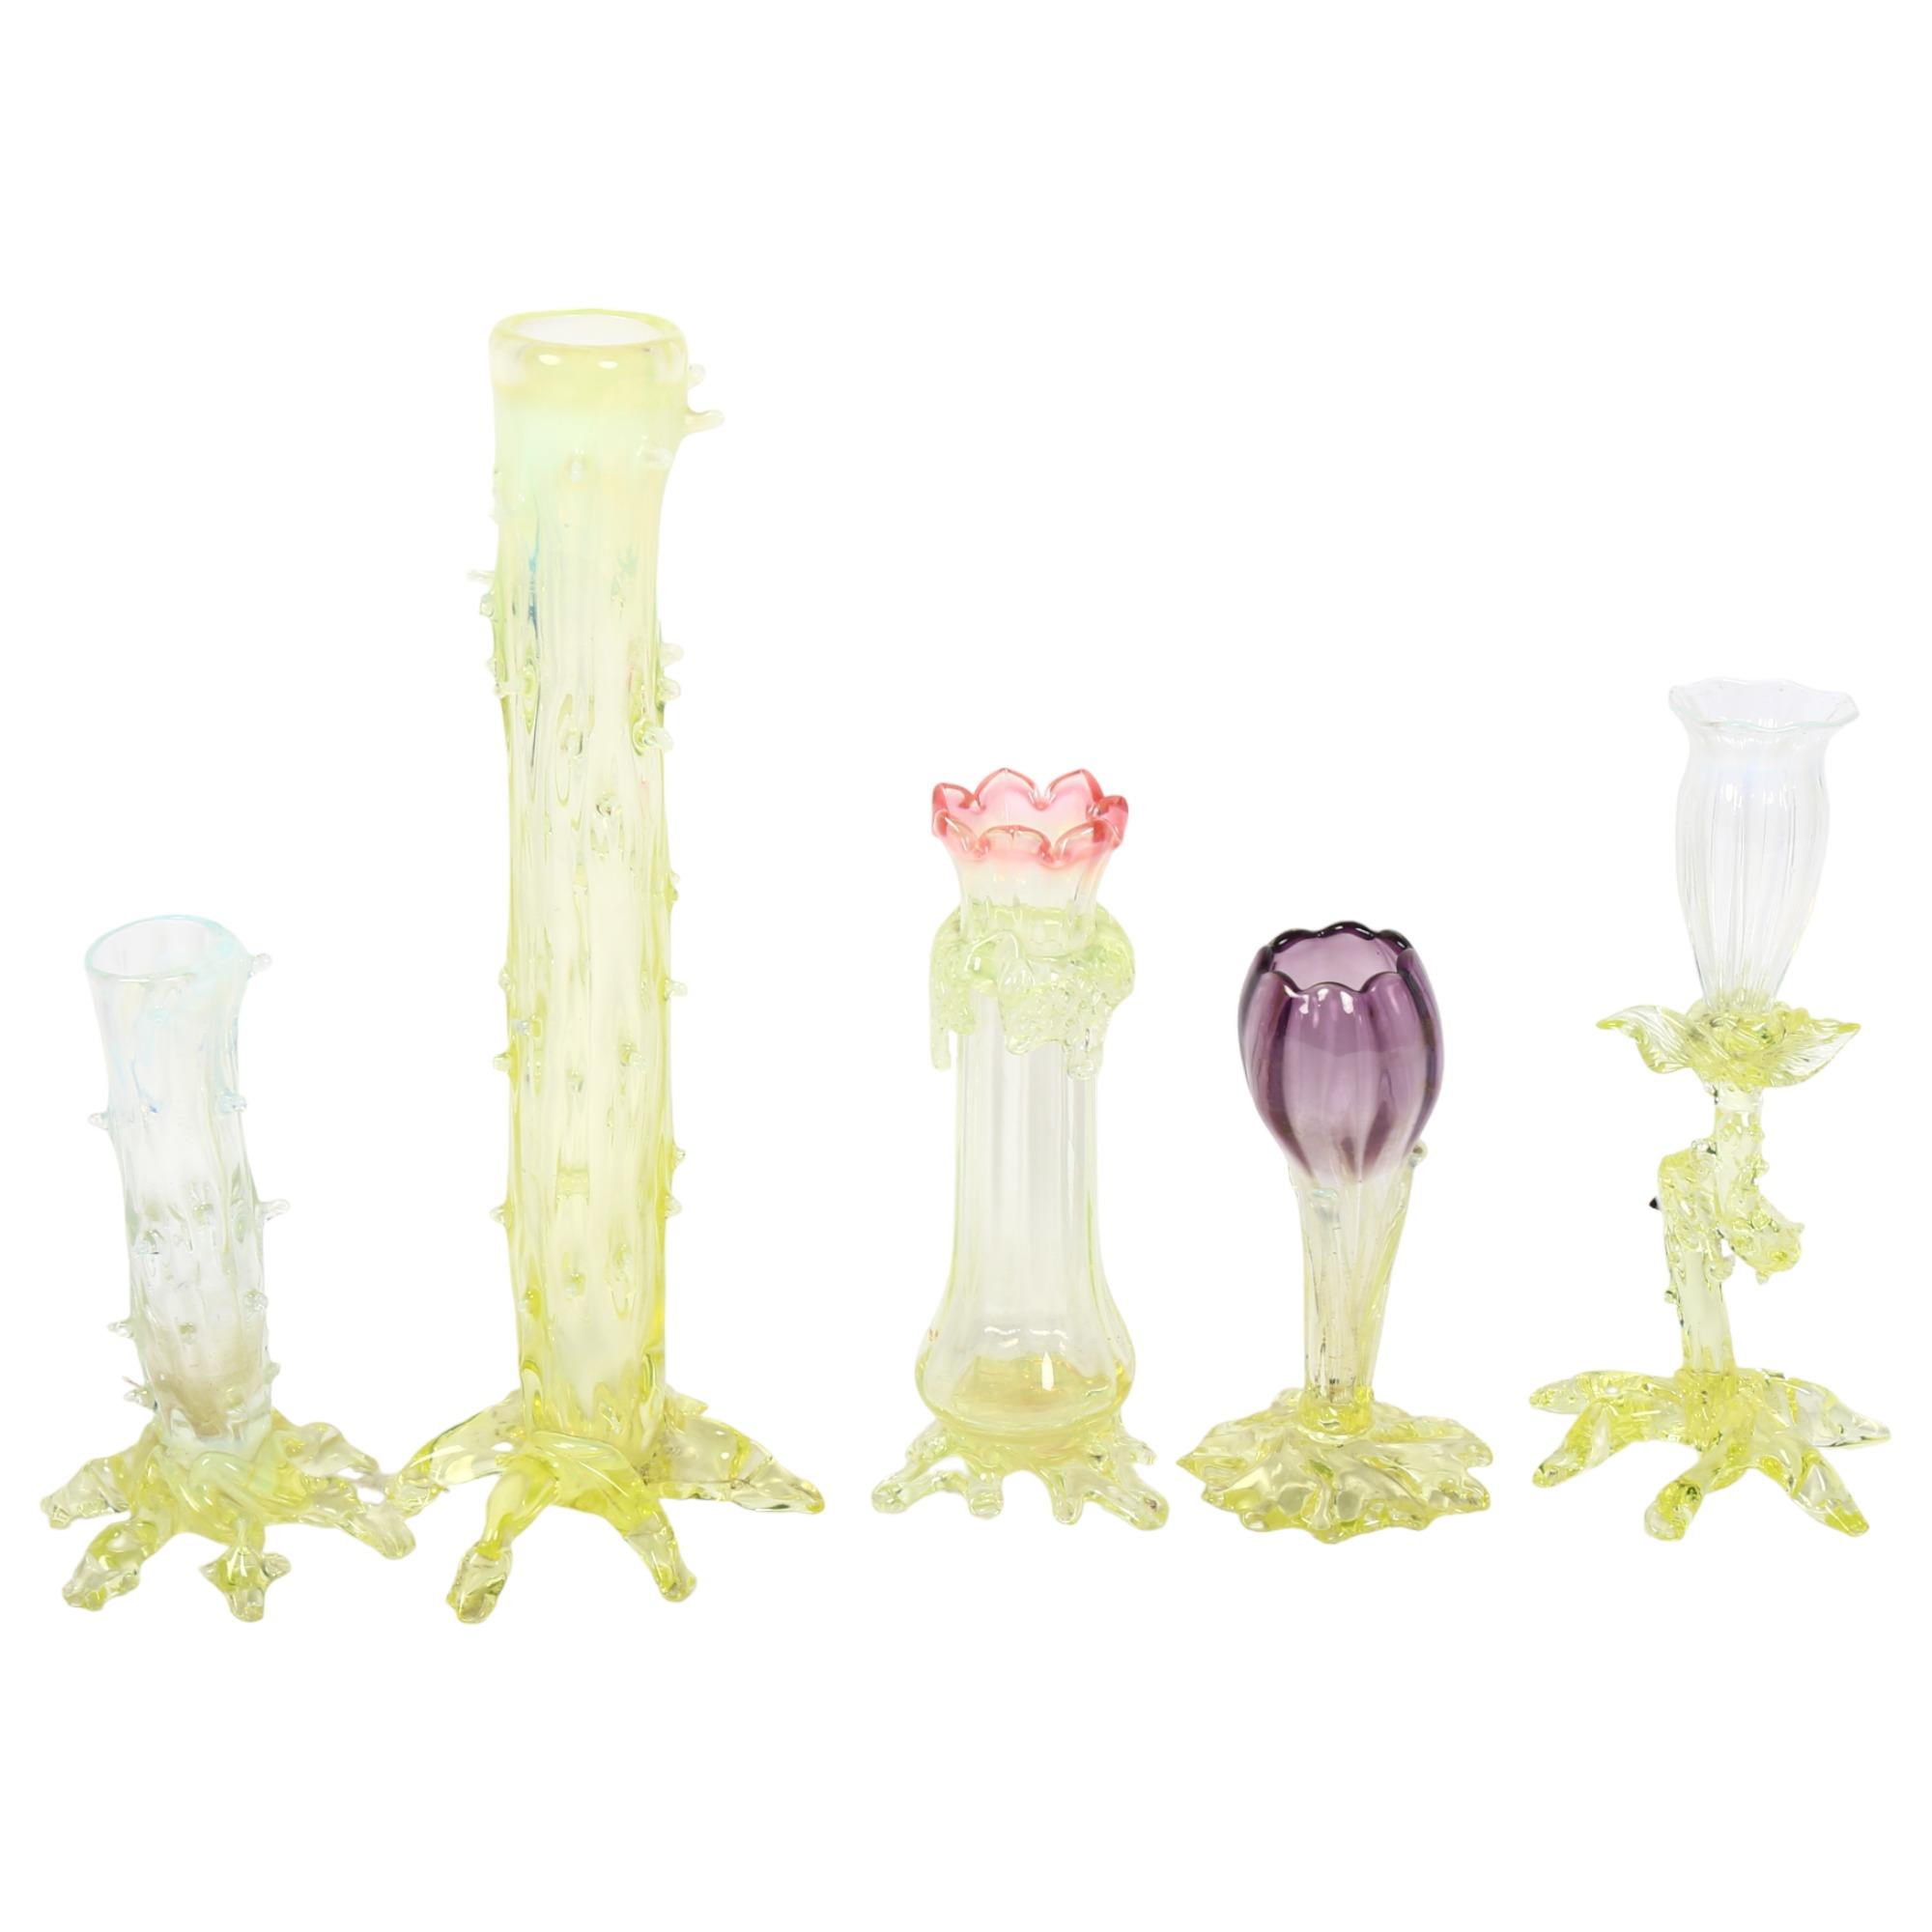 A group 5 items of Victorian form glass, including a crocus design specimen vase, tallest 26cm